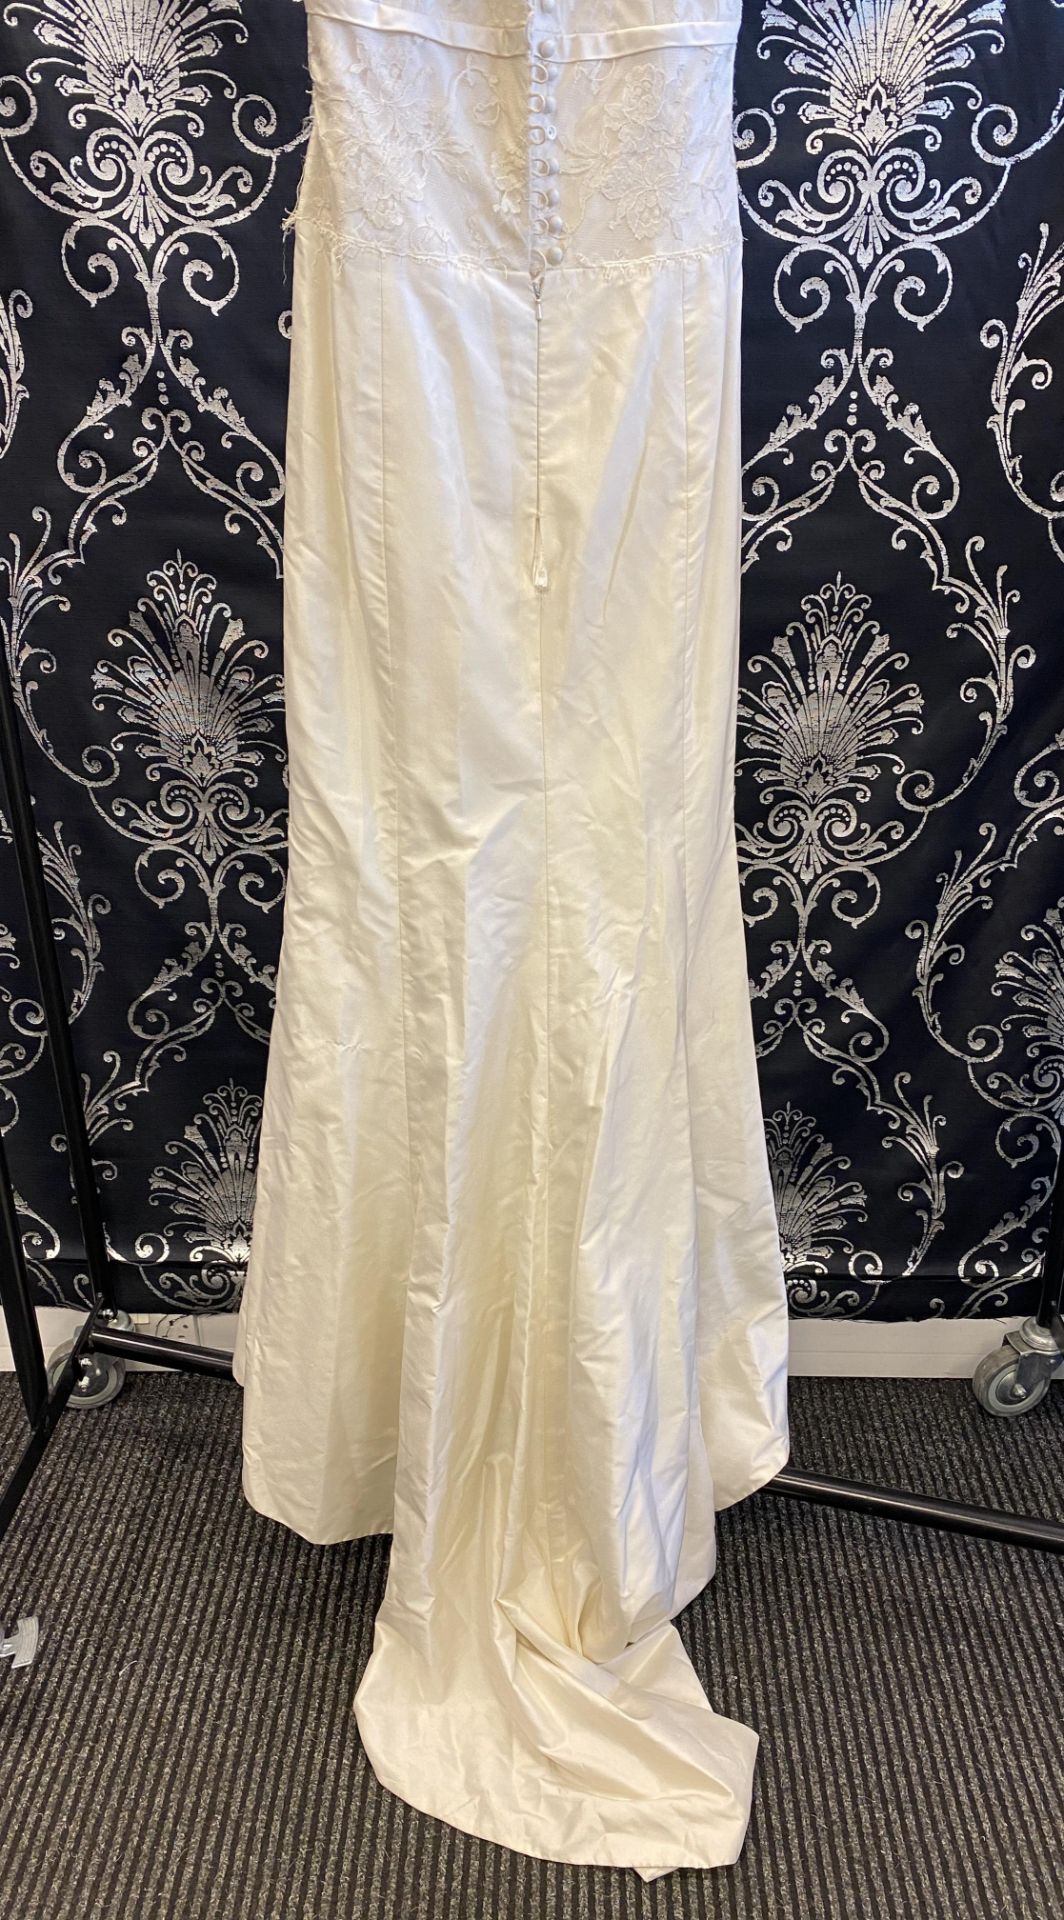 1 x ALAN HANNAH 'Estelle' Elegant Lace And Satin Fishtail Designer Wedding Dress RRP £1,200 UK 12 - Image 2 of 10